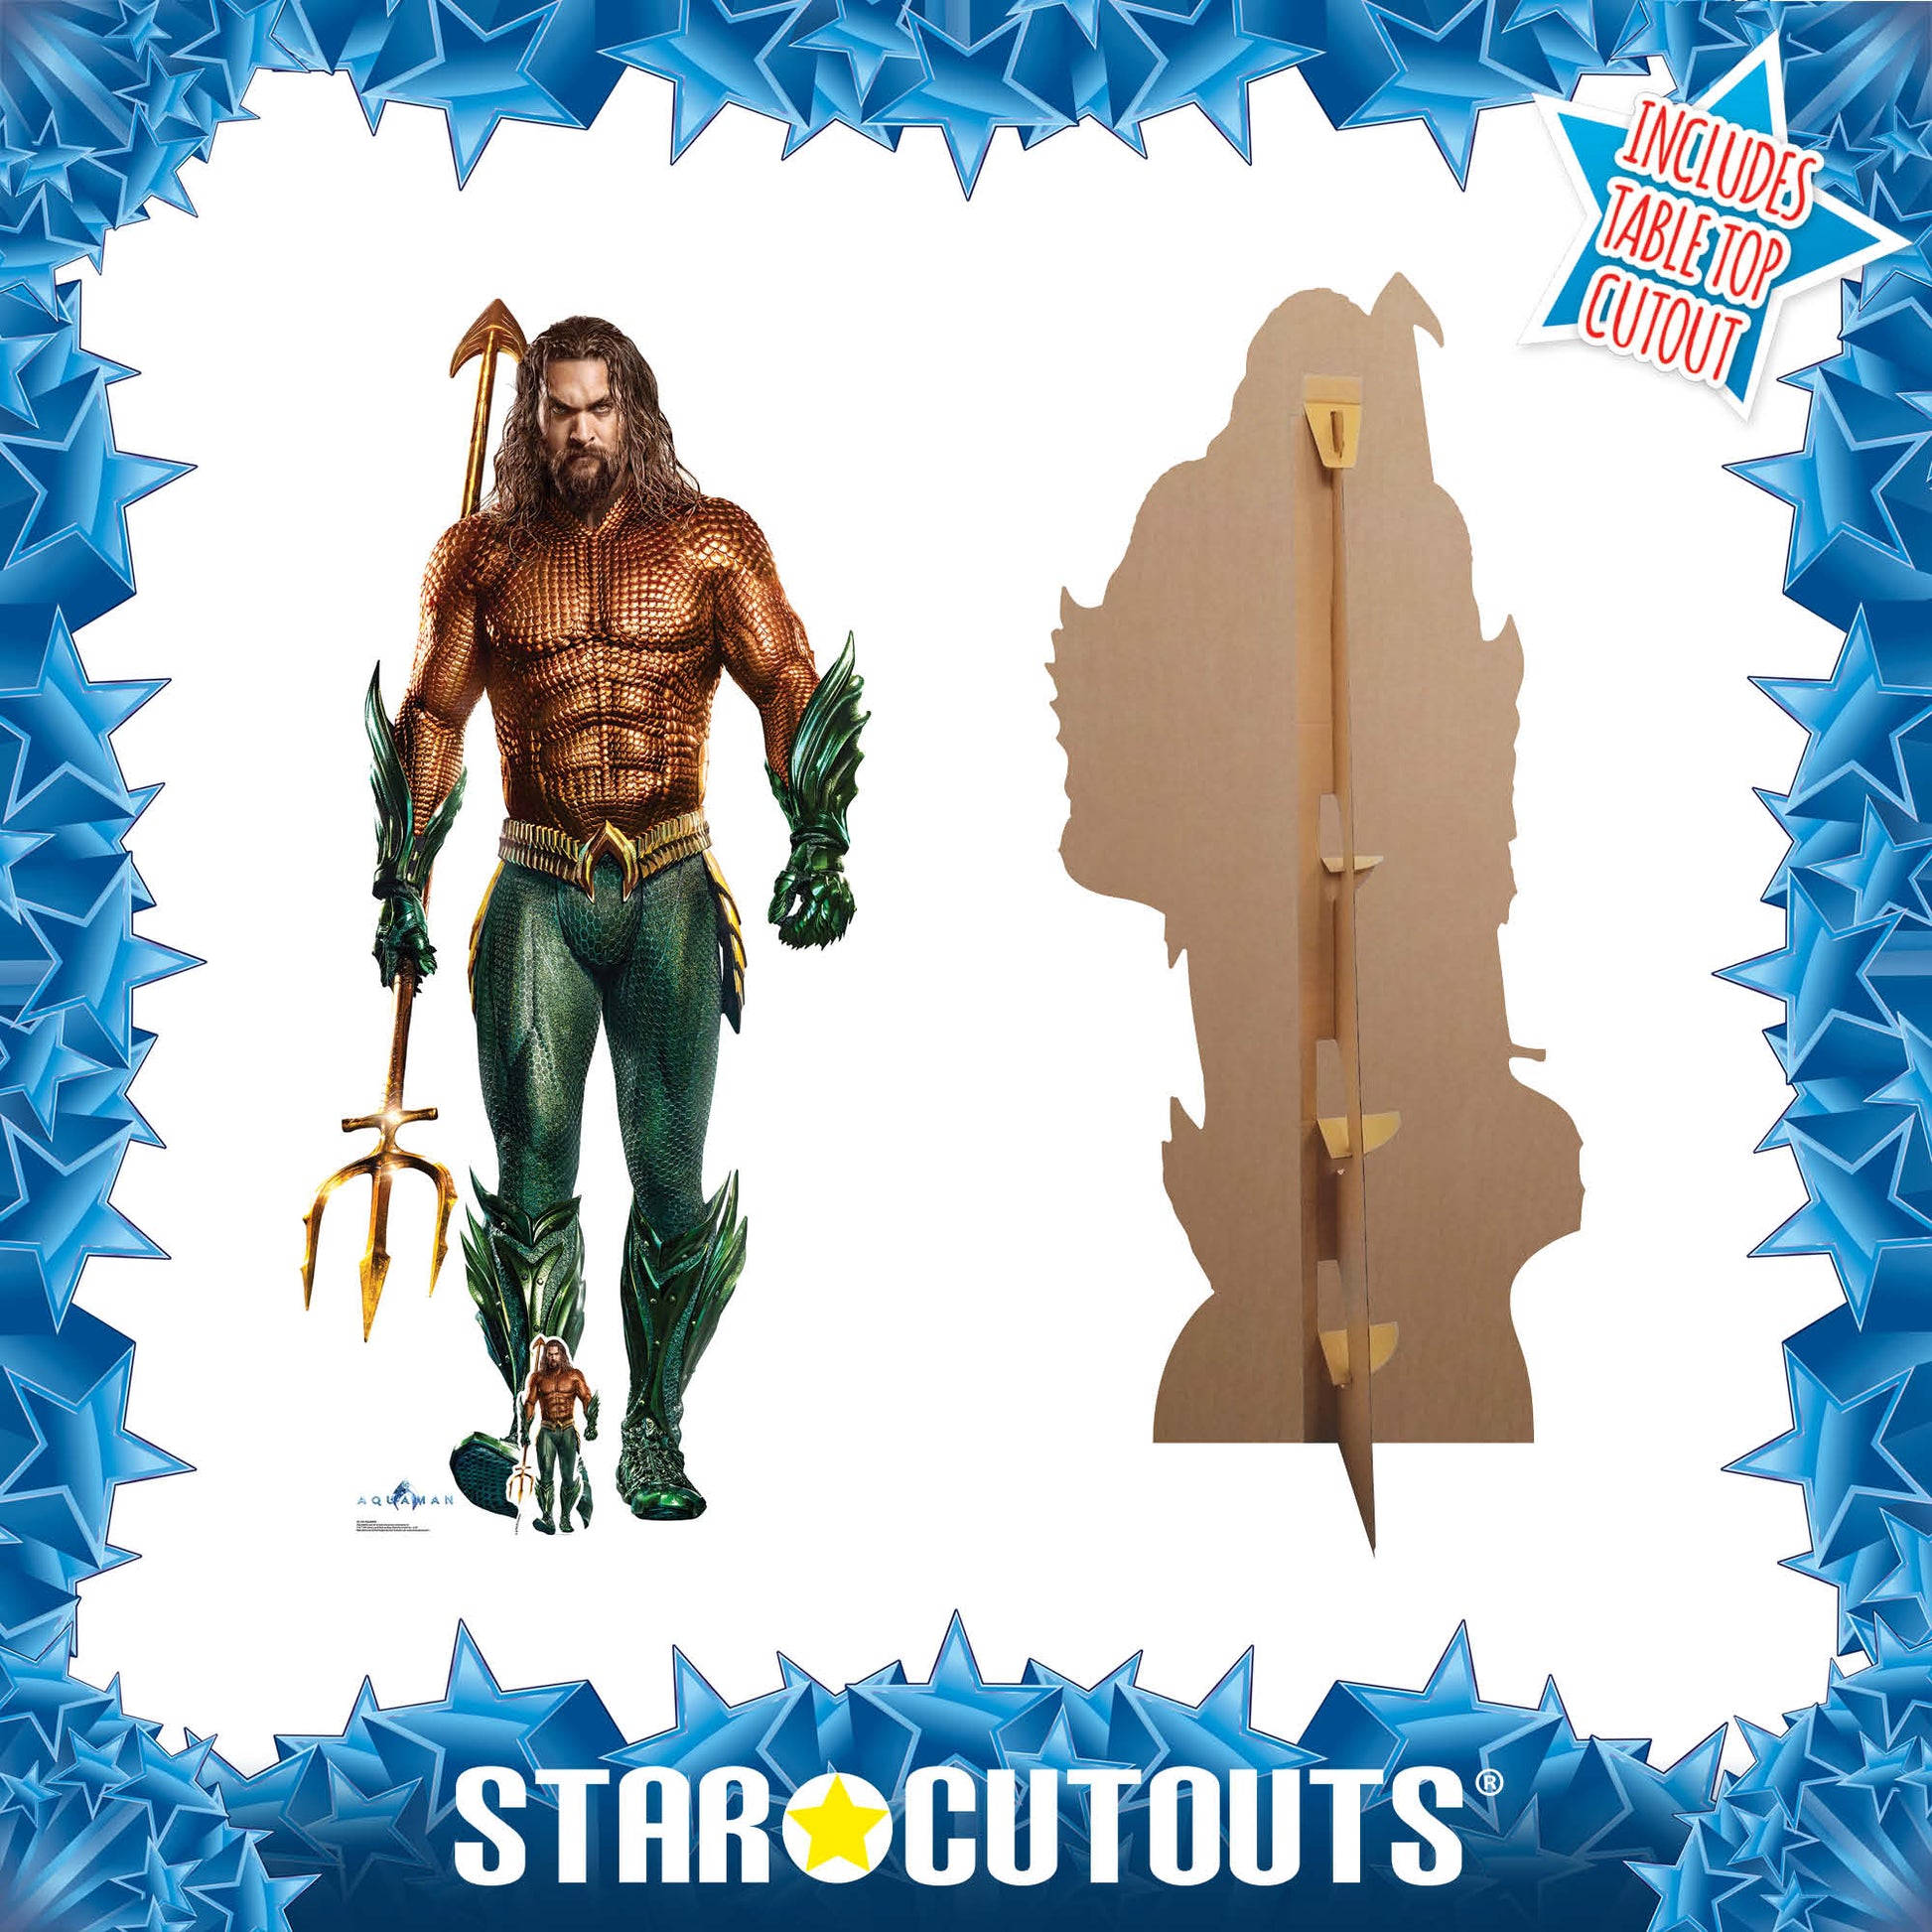 SC1397 Aquaman Cardboard Cut Out Height 194cm - Star Cutouts